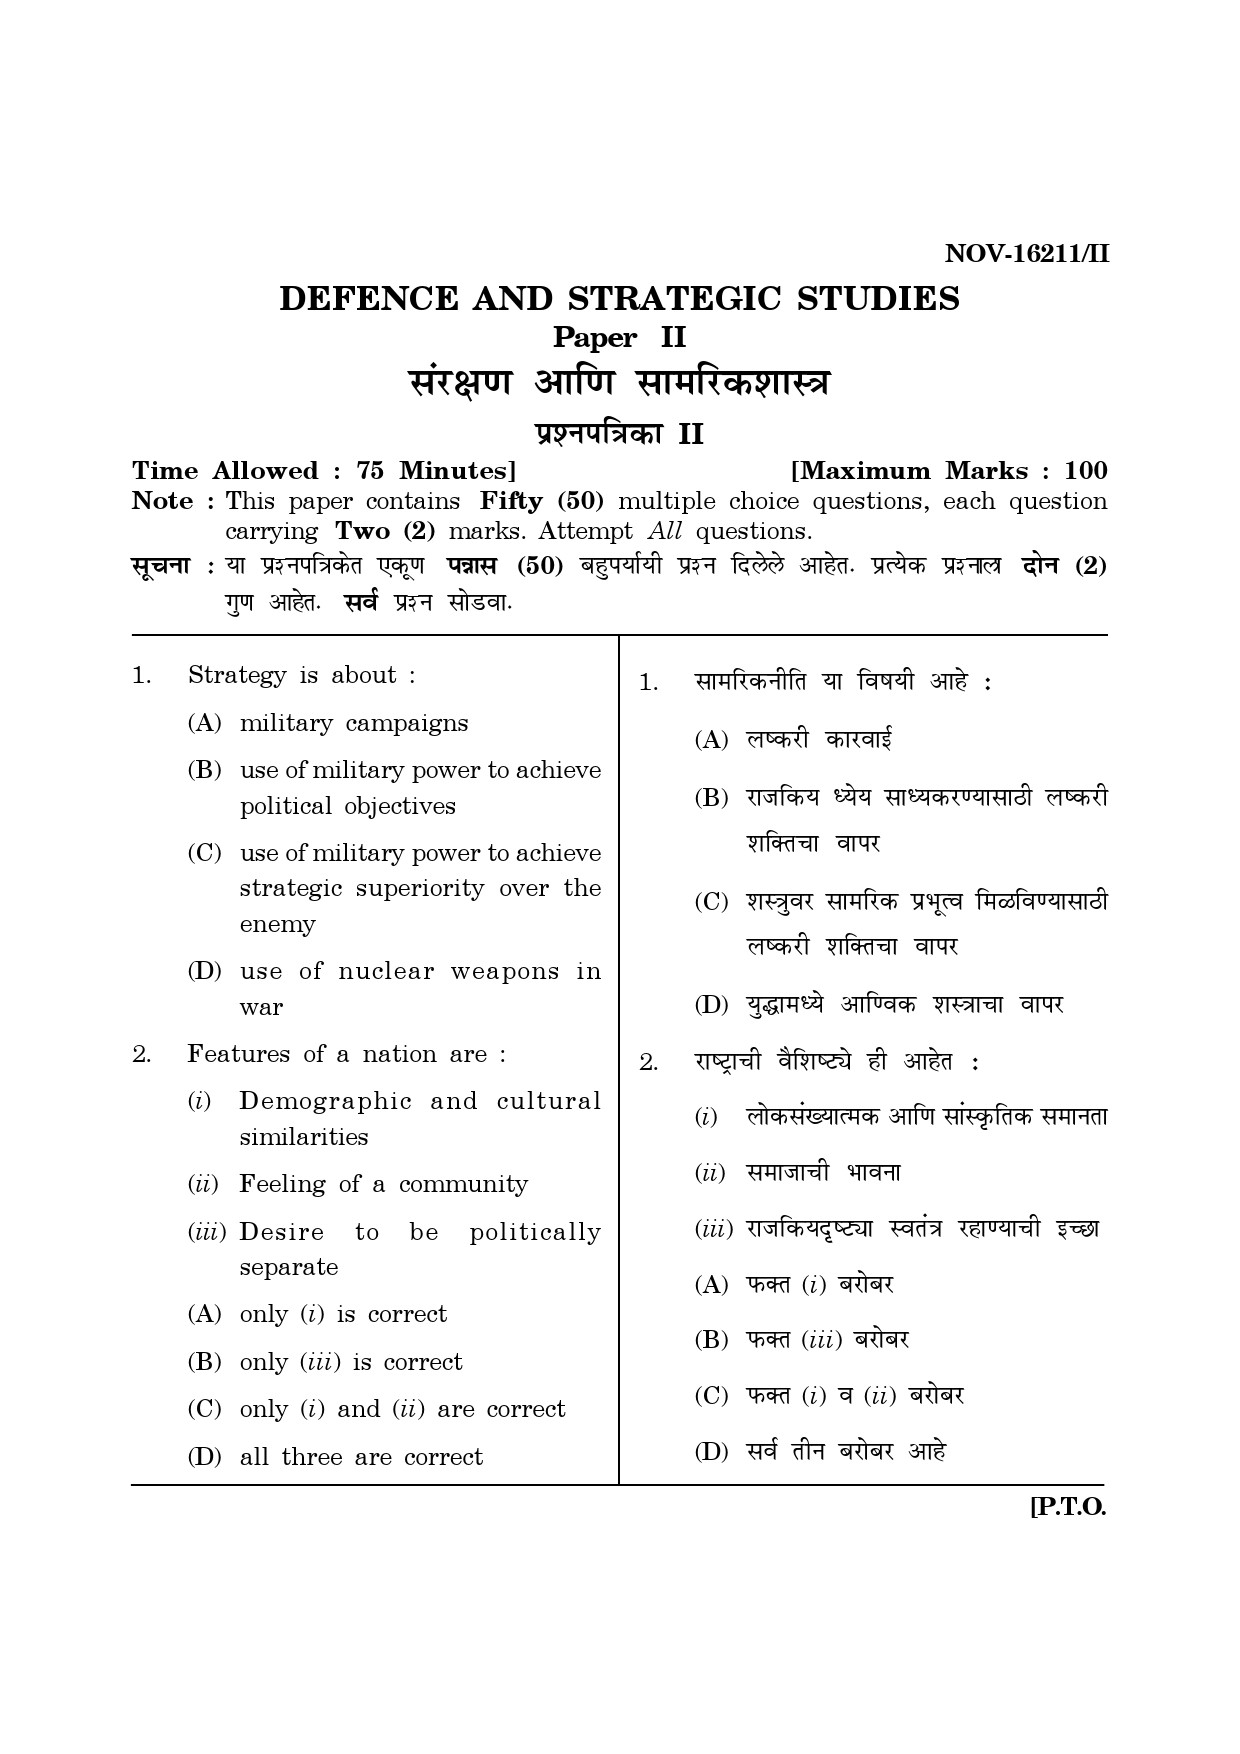 Maharashtra SET Defence and Strategic Studies Question Paper II November 2011 1